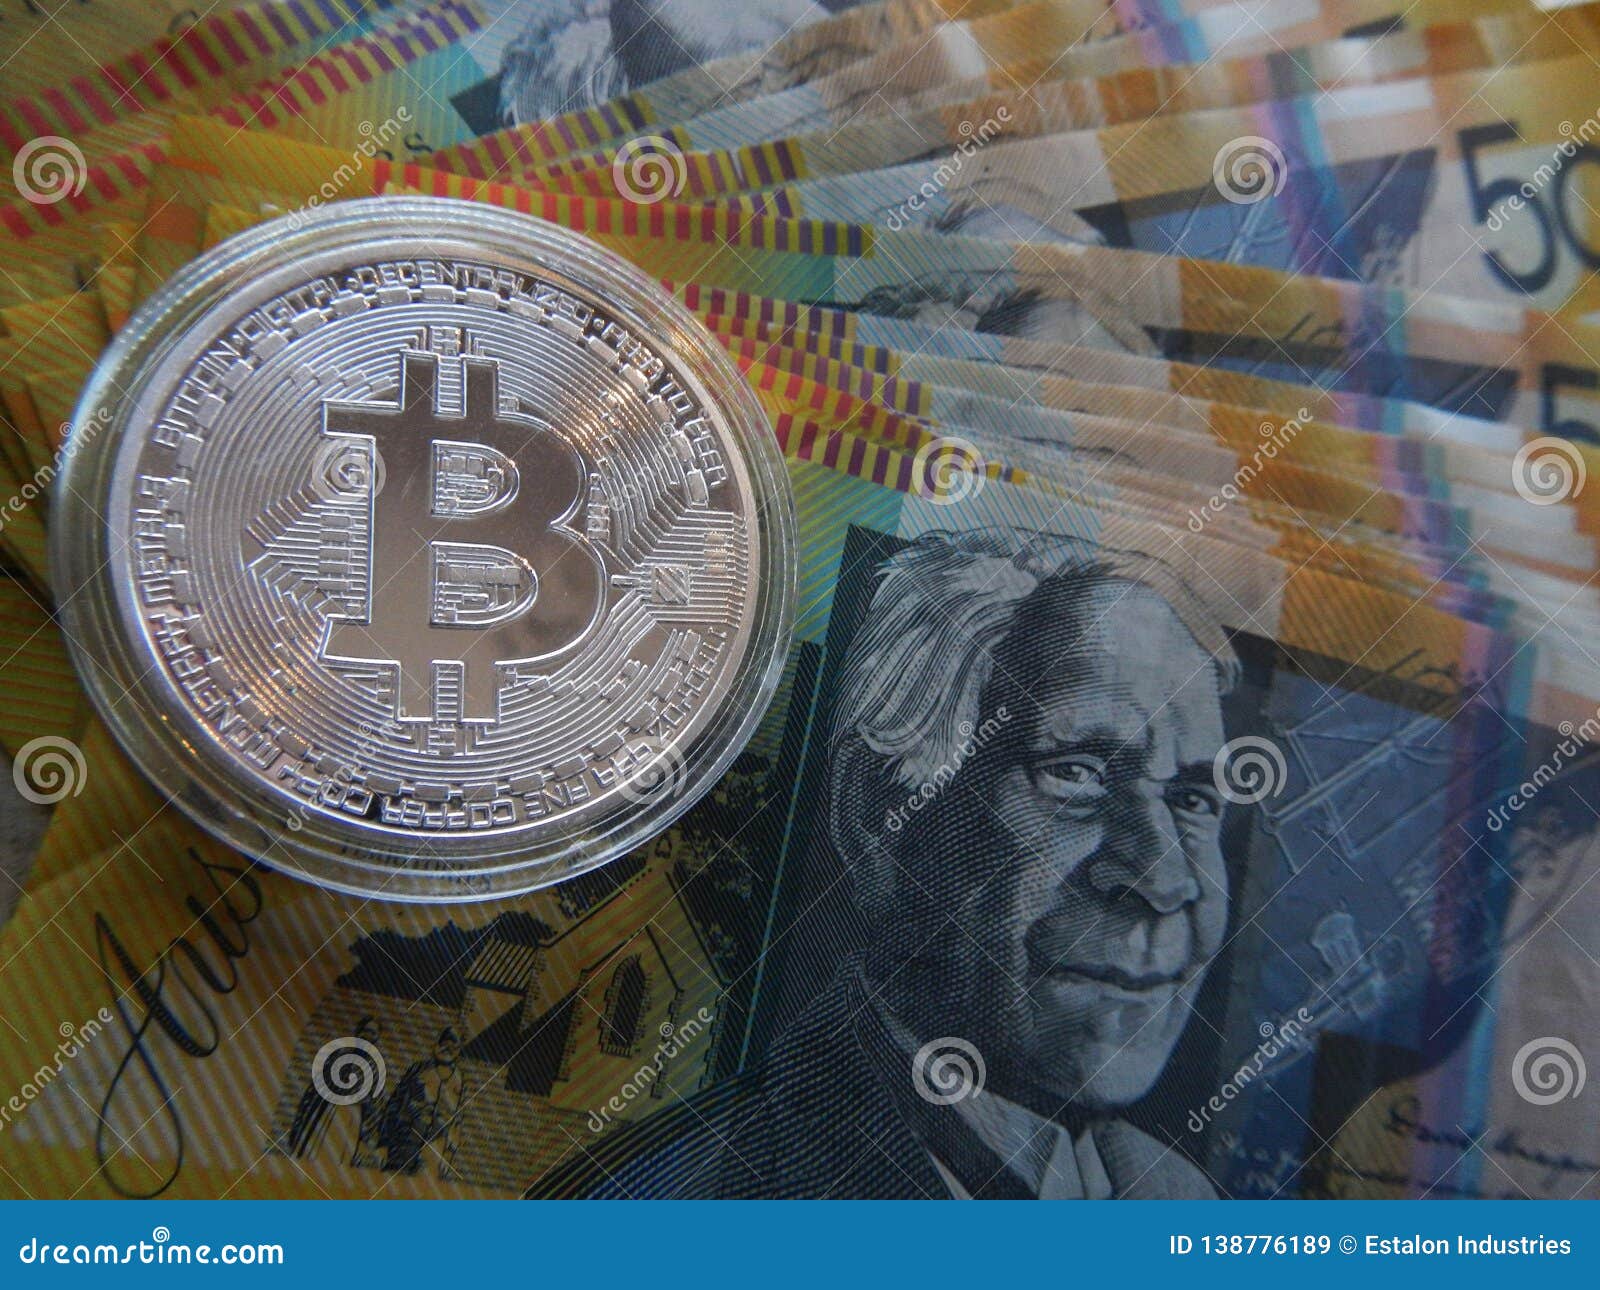 buy silver with bitcoin australia